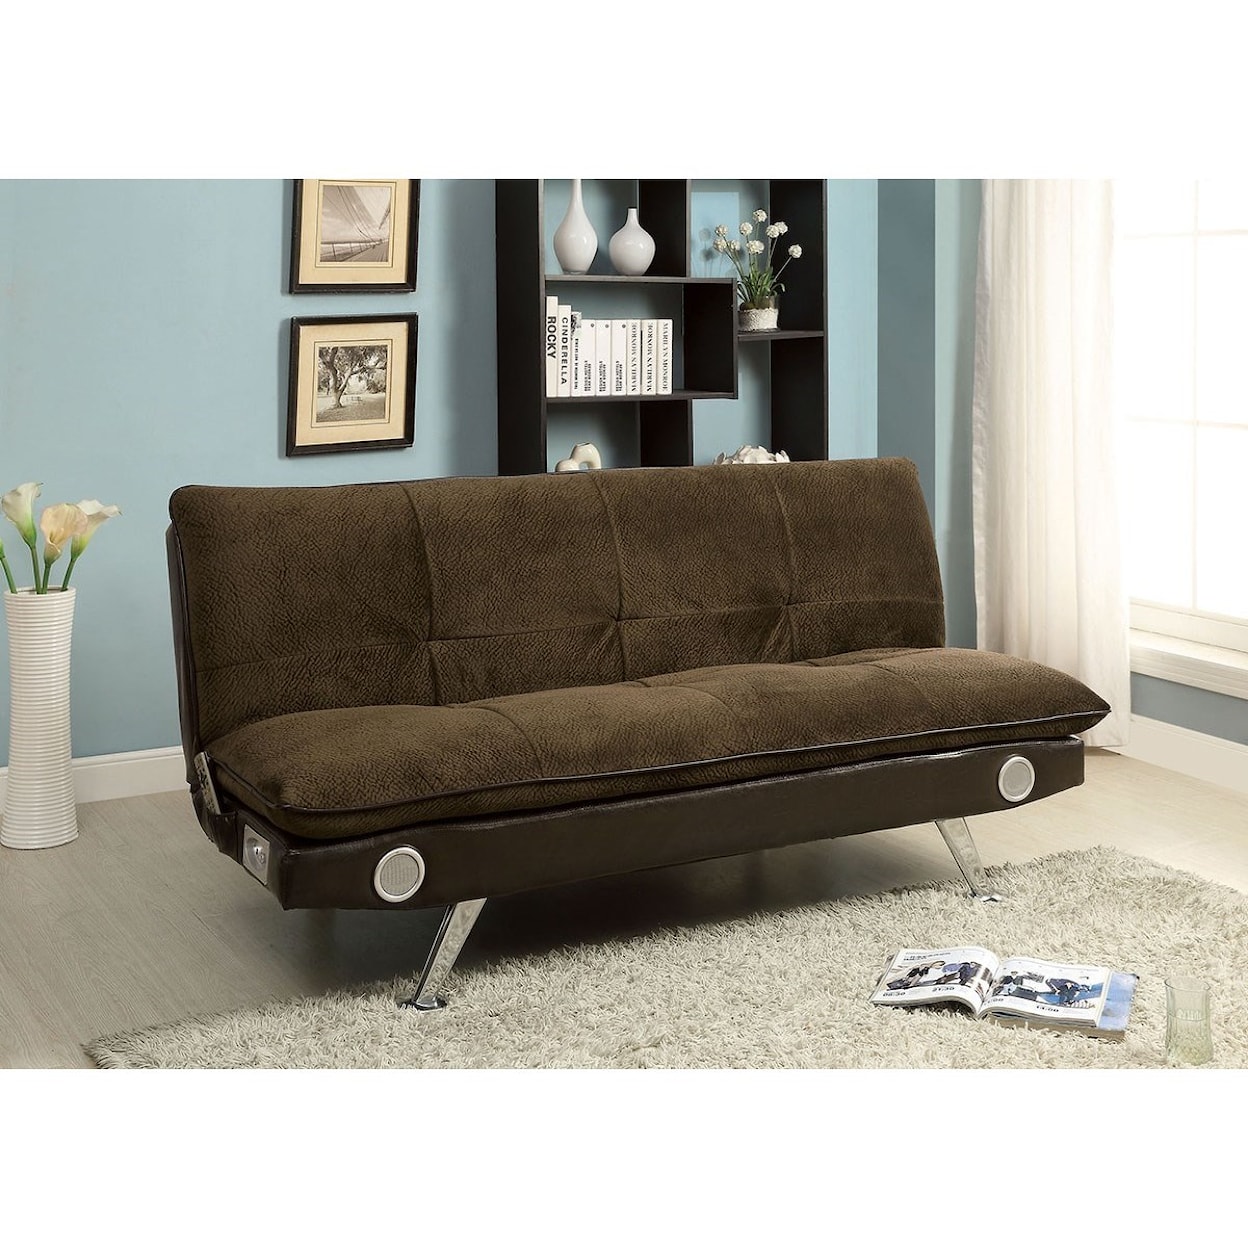 Furniture of America Gallagher Futon Sofa with Bluetooth Speaker